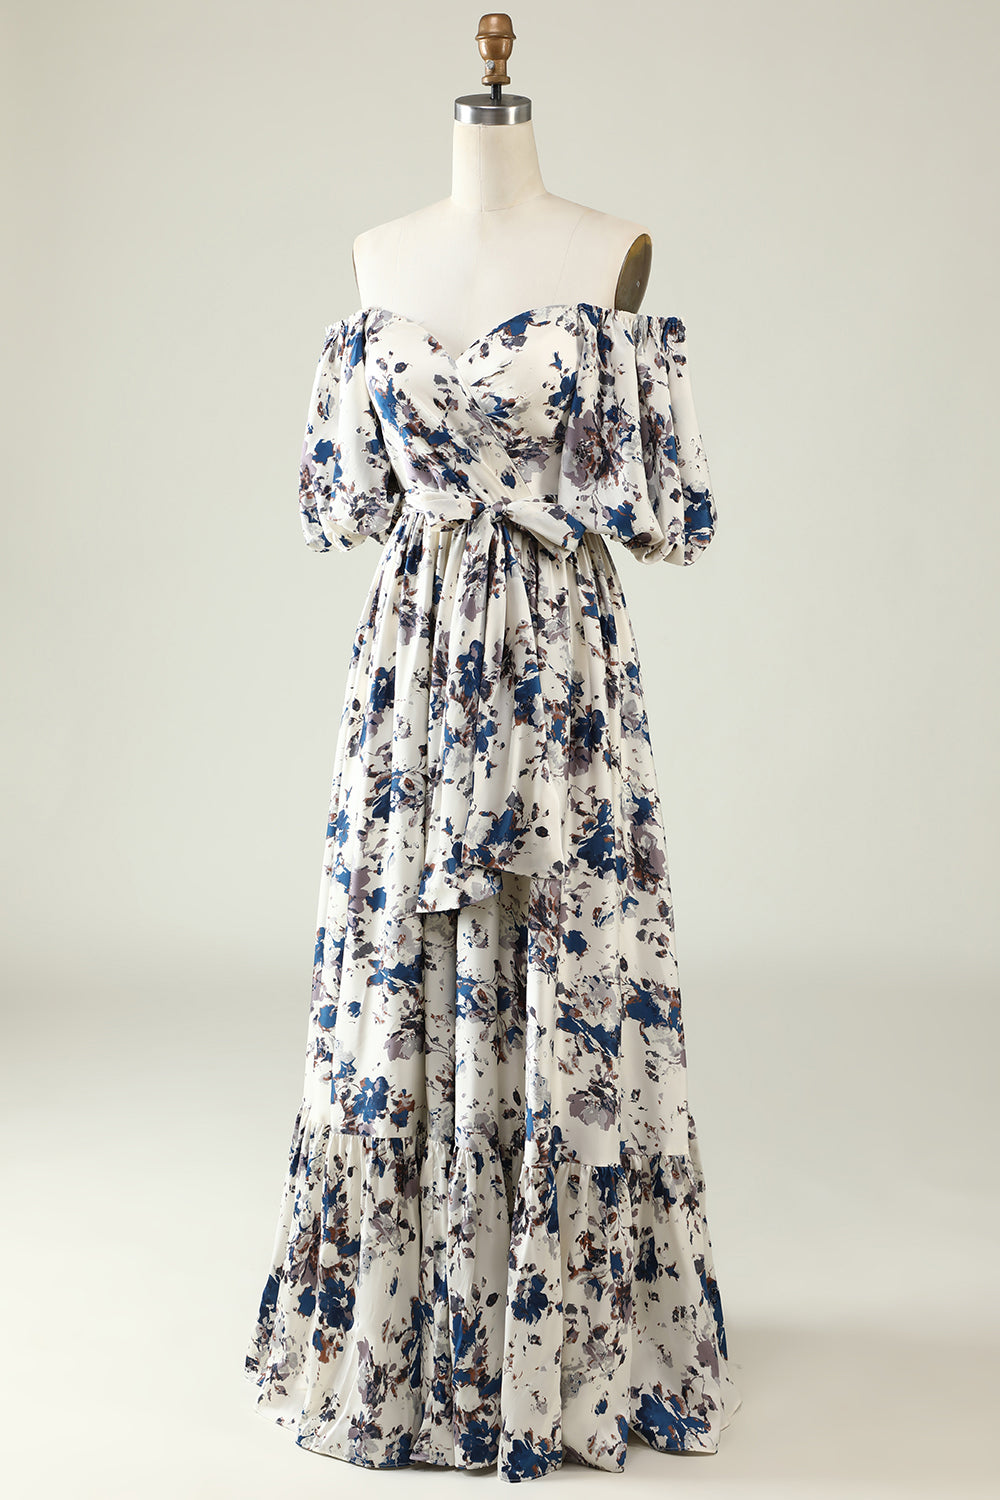 Romantic A-Line Off The Shoulder Long Print Dress With Belt